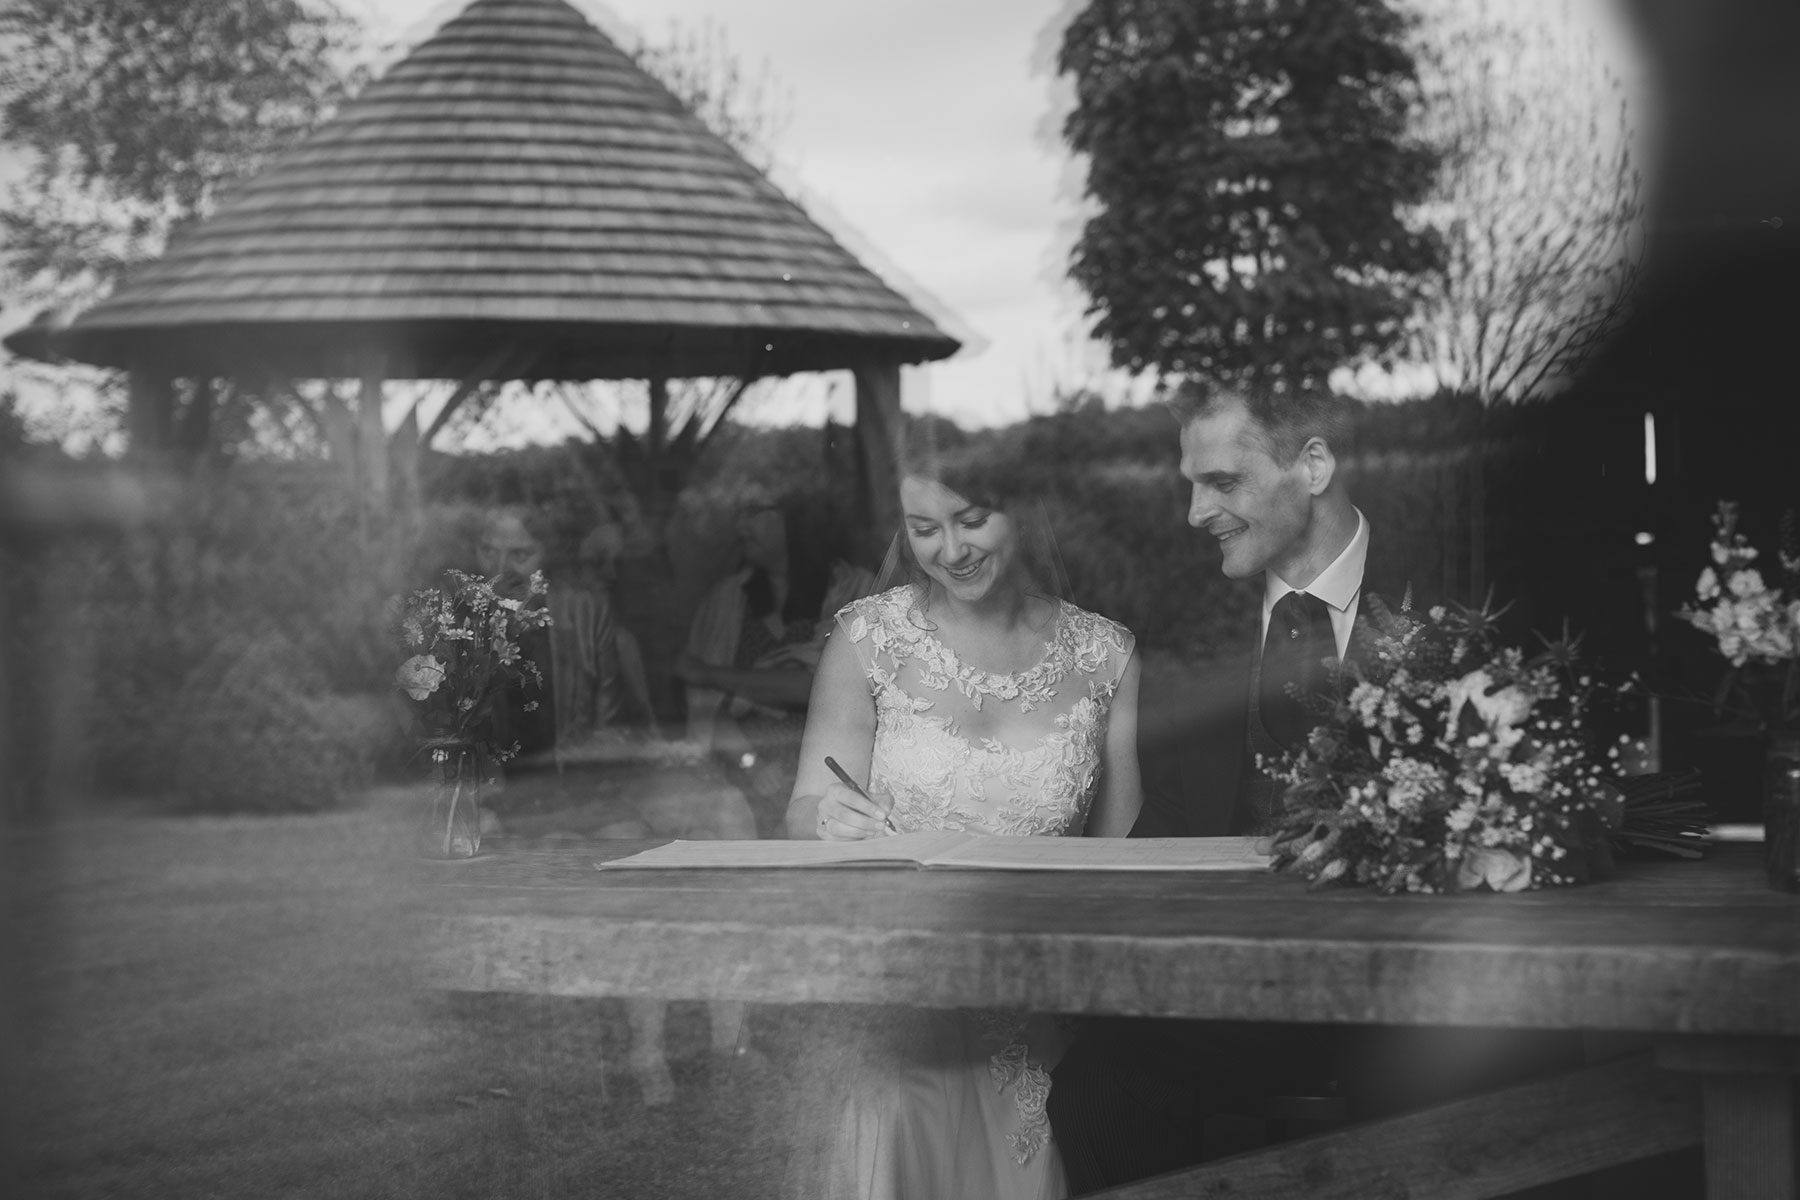 The Signing - Wedding Photography in Cheltenham, Cripps Stone Barn | Bullit Photography